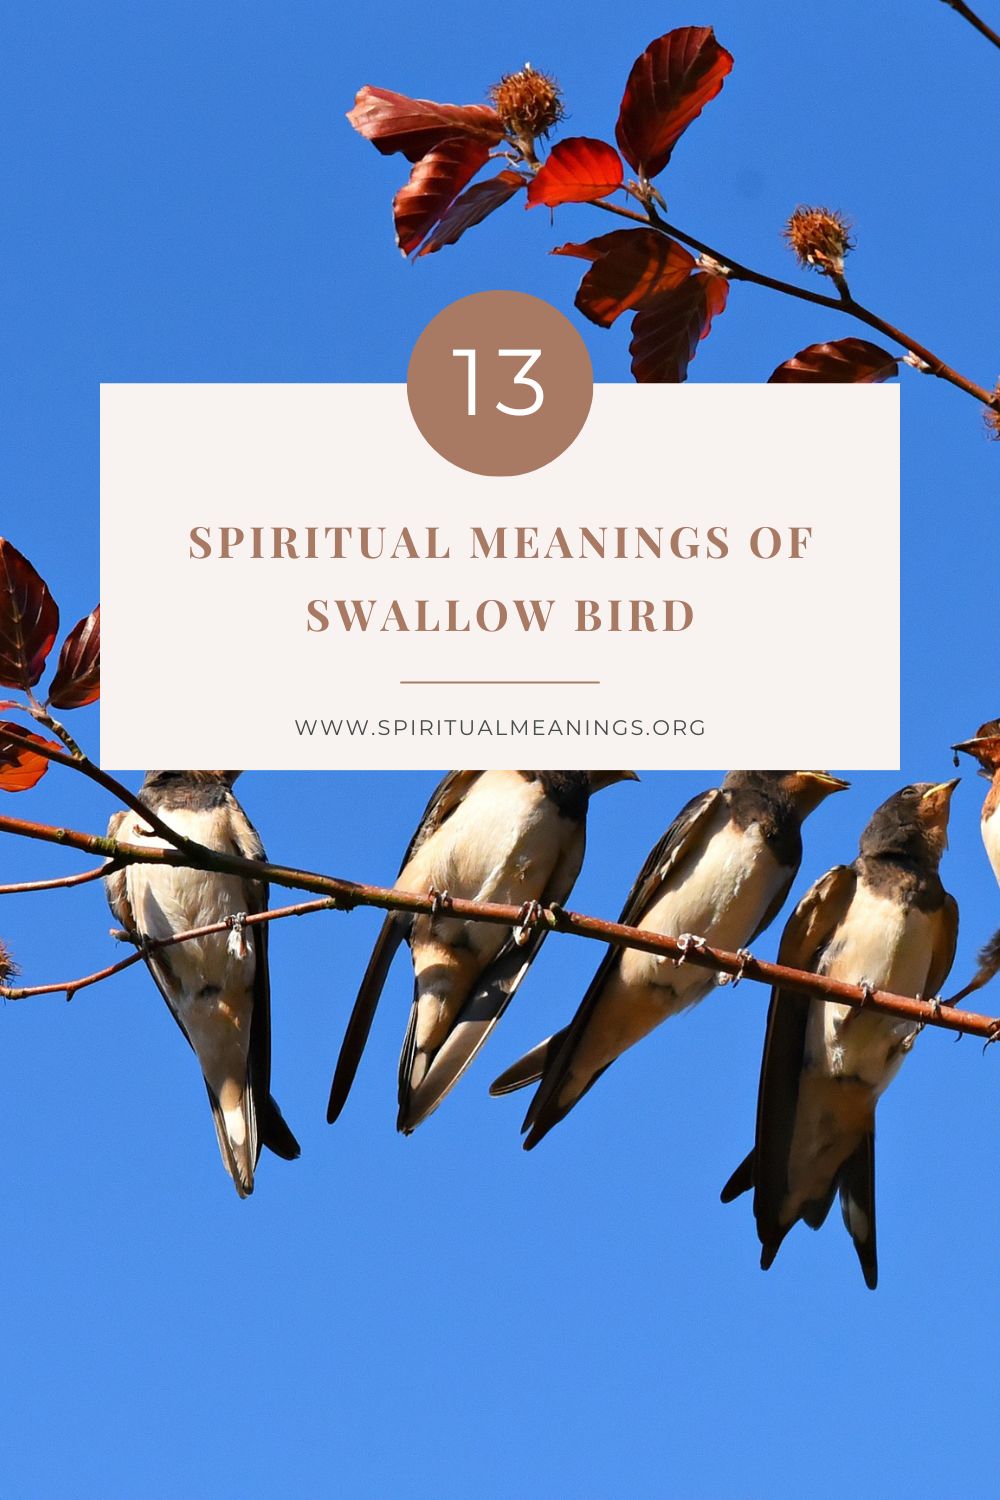 13 Spiritual Meanings of Swallow Bird